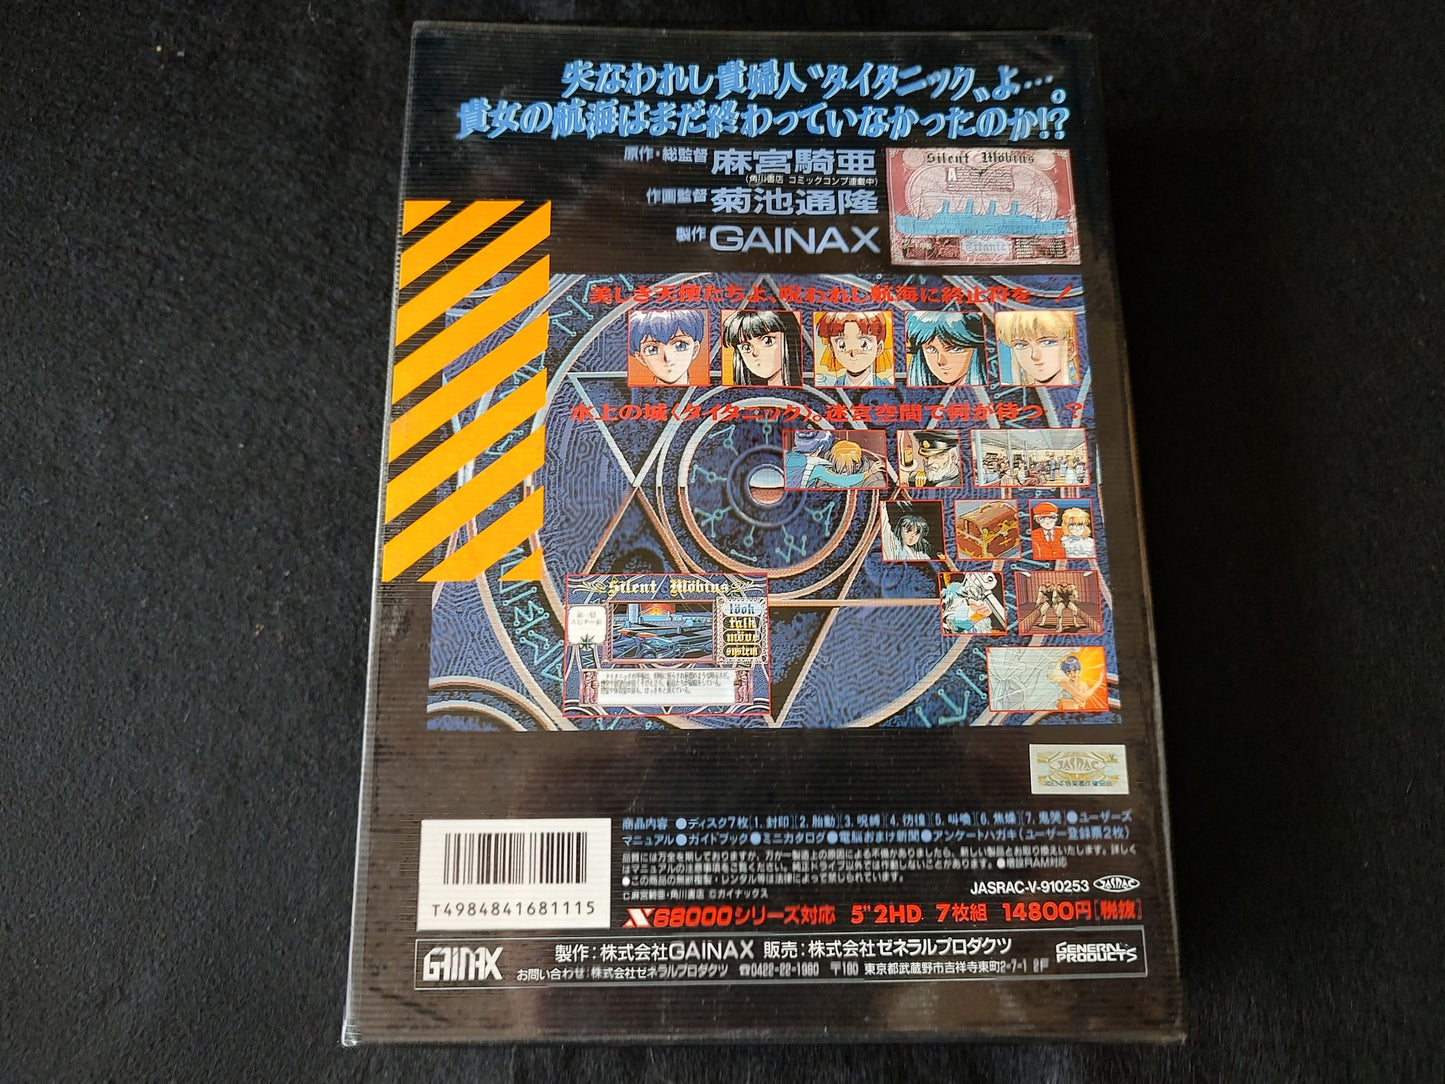 SILENT MÖBIUS CASE TITANIC GINAX SHARP X68000 Game w/Manual, Box set-f0621-